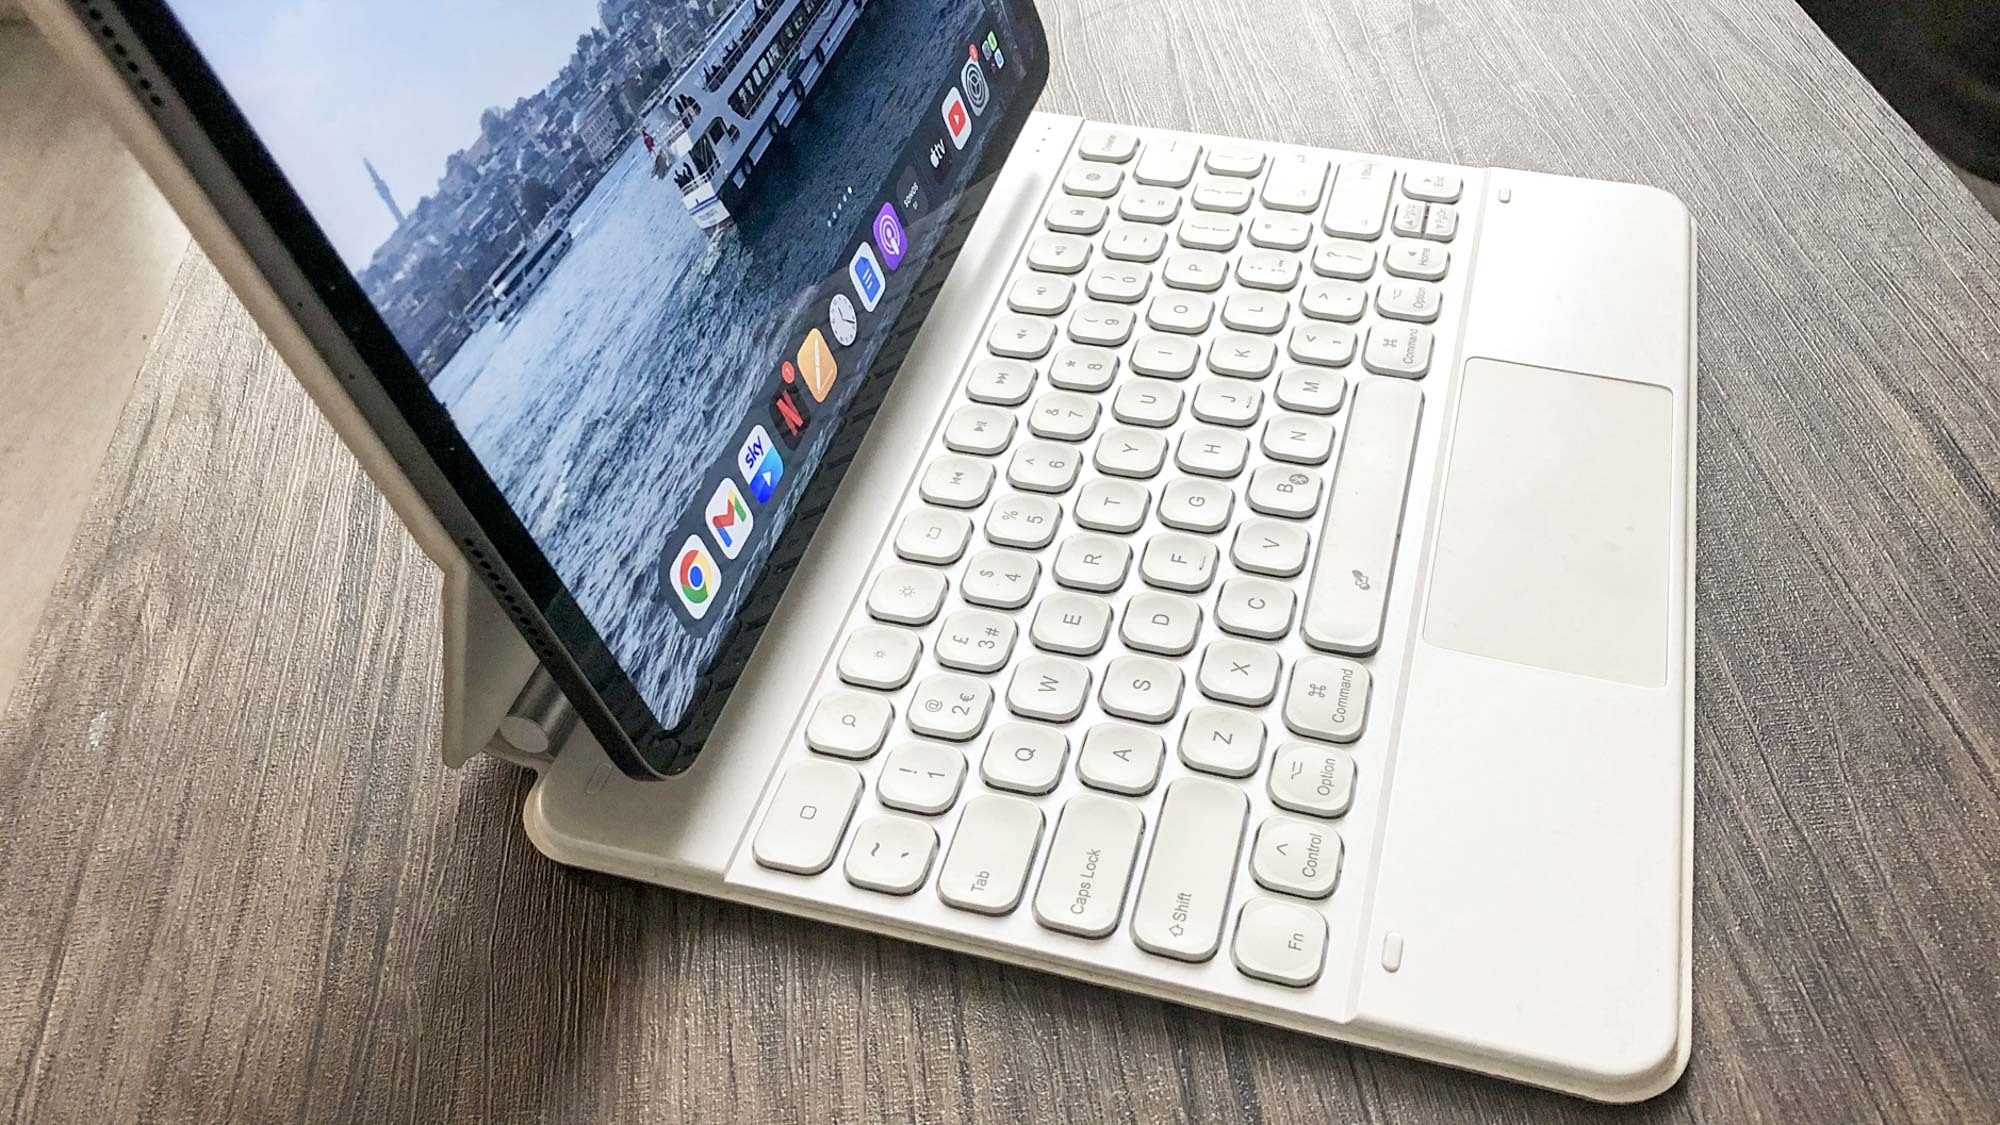 Apple Magic Keyboard for iPad Review: The Best iPad Keyboard